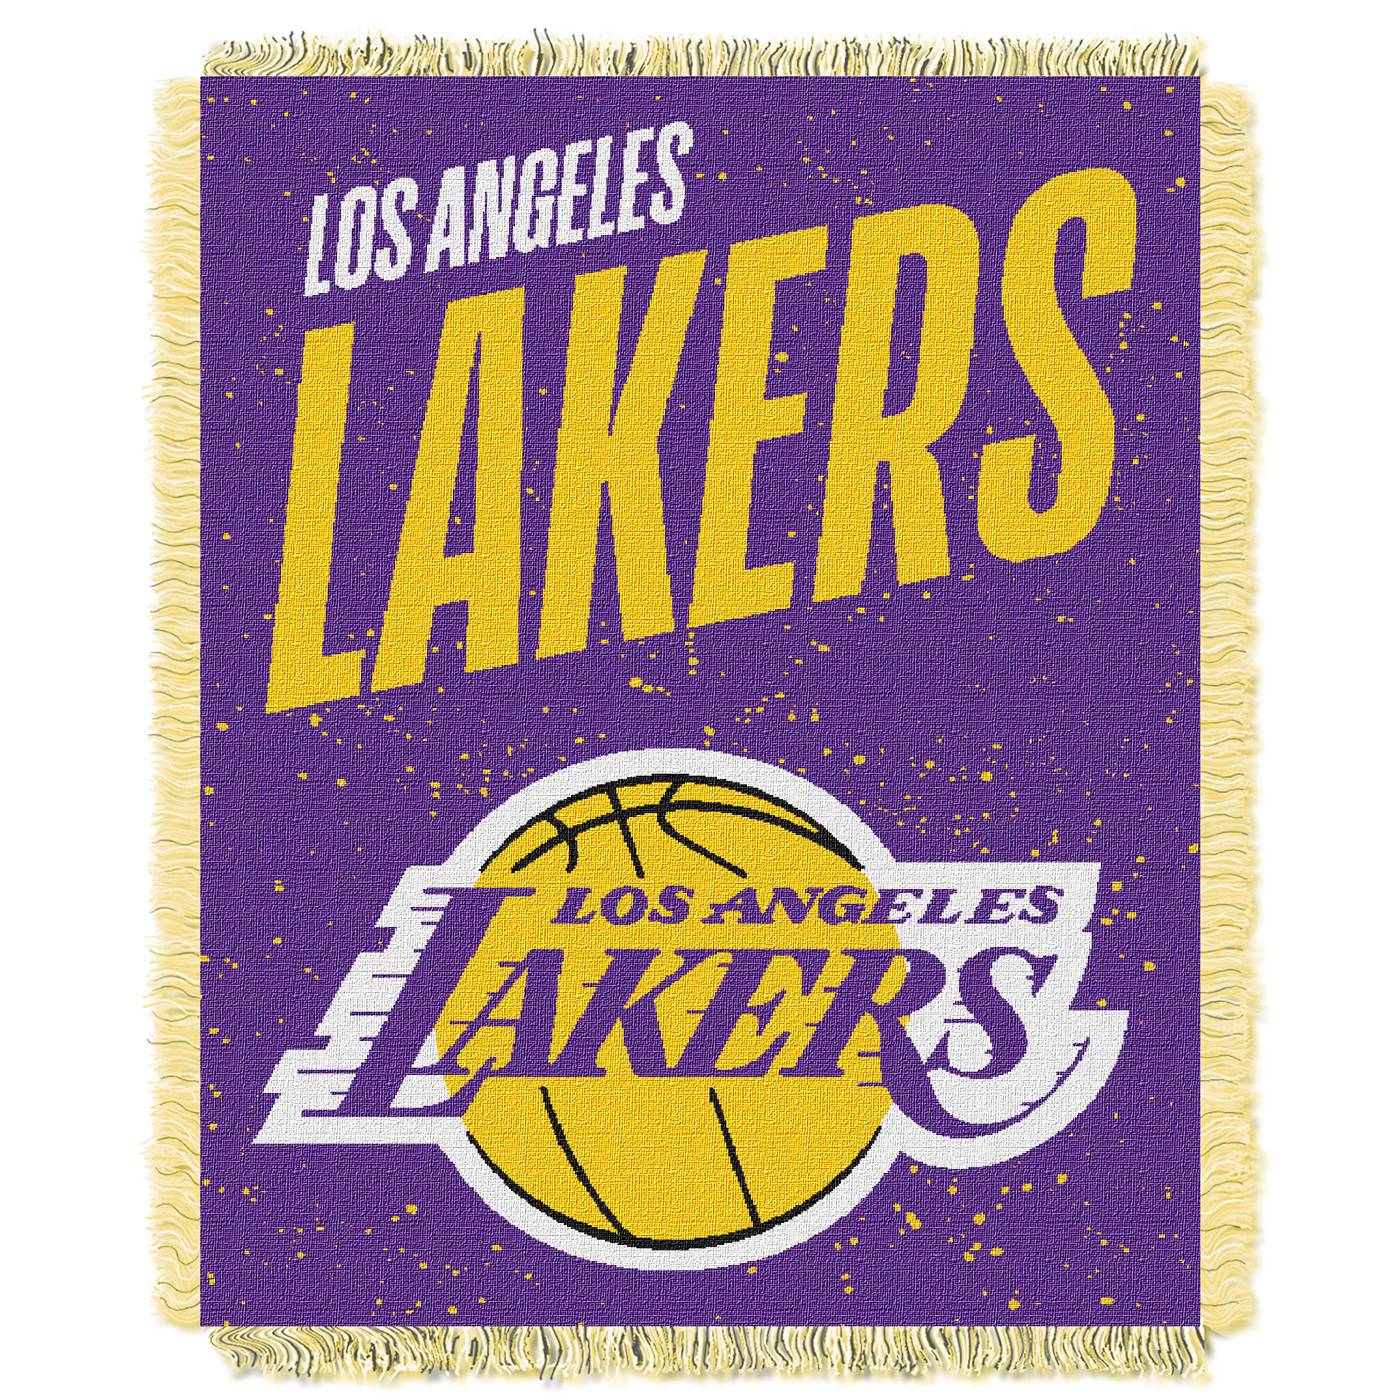 Los Angeles Lakers Headliner Woven Jacquard Throw Blanket